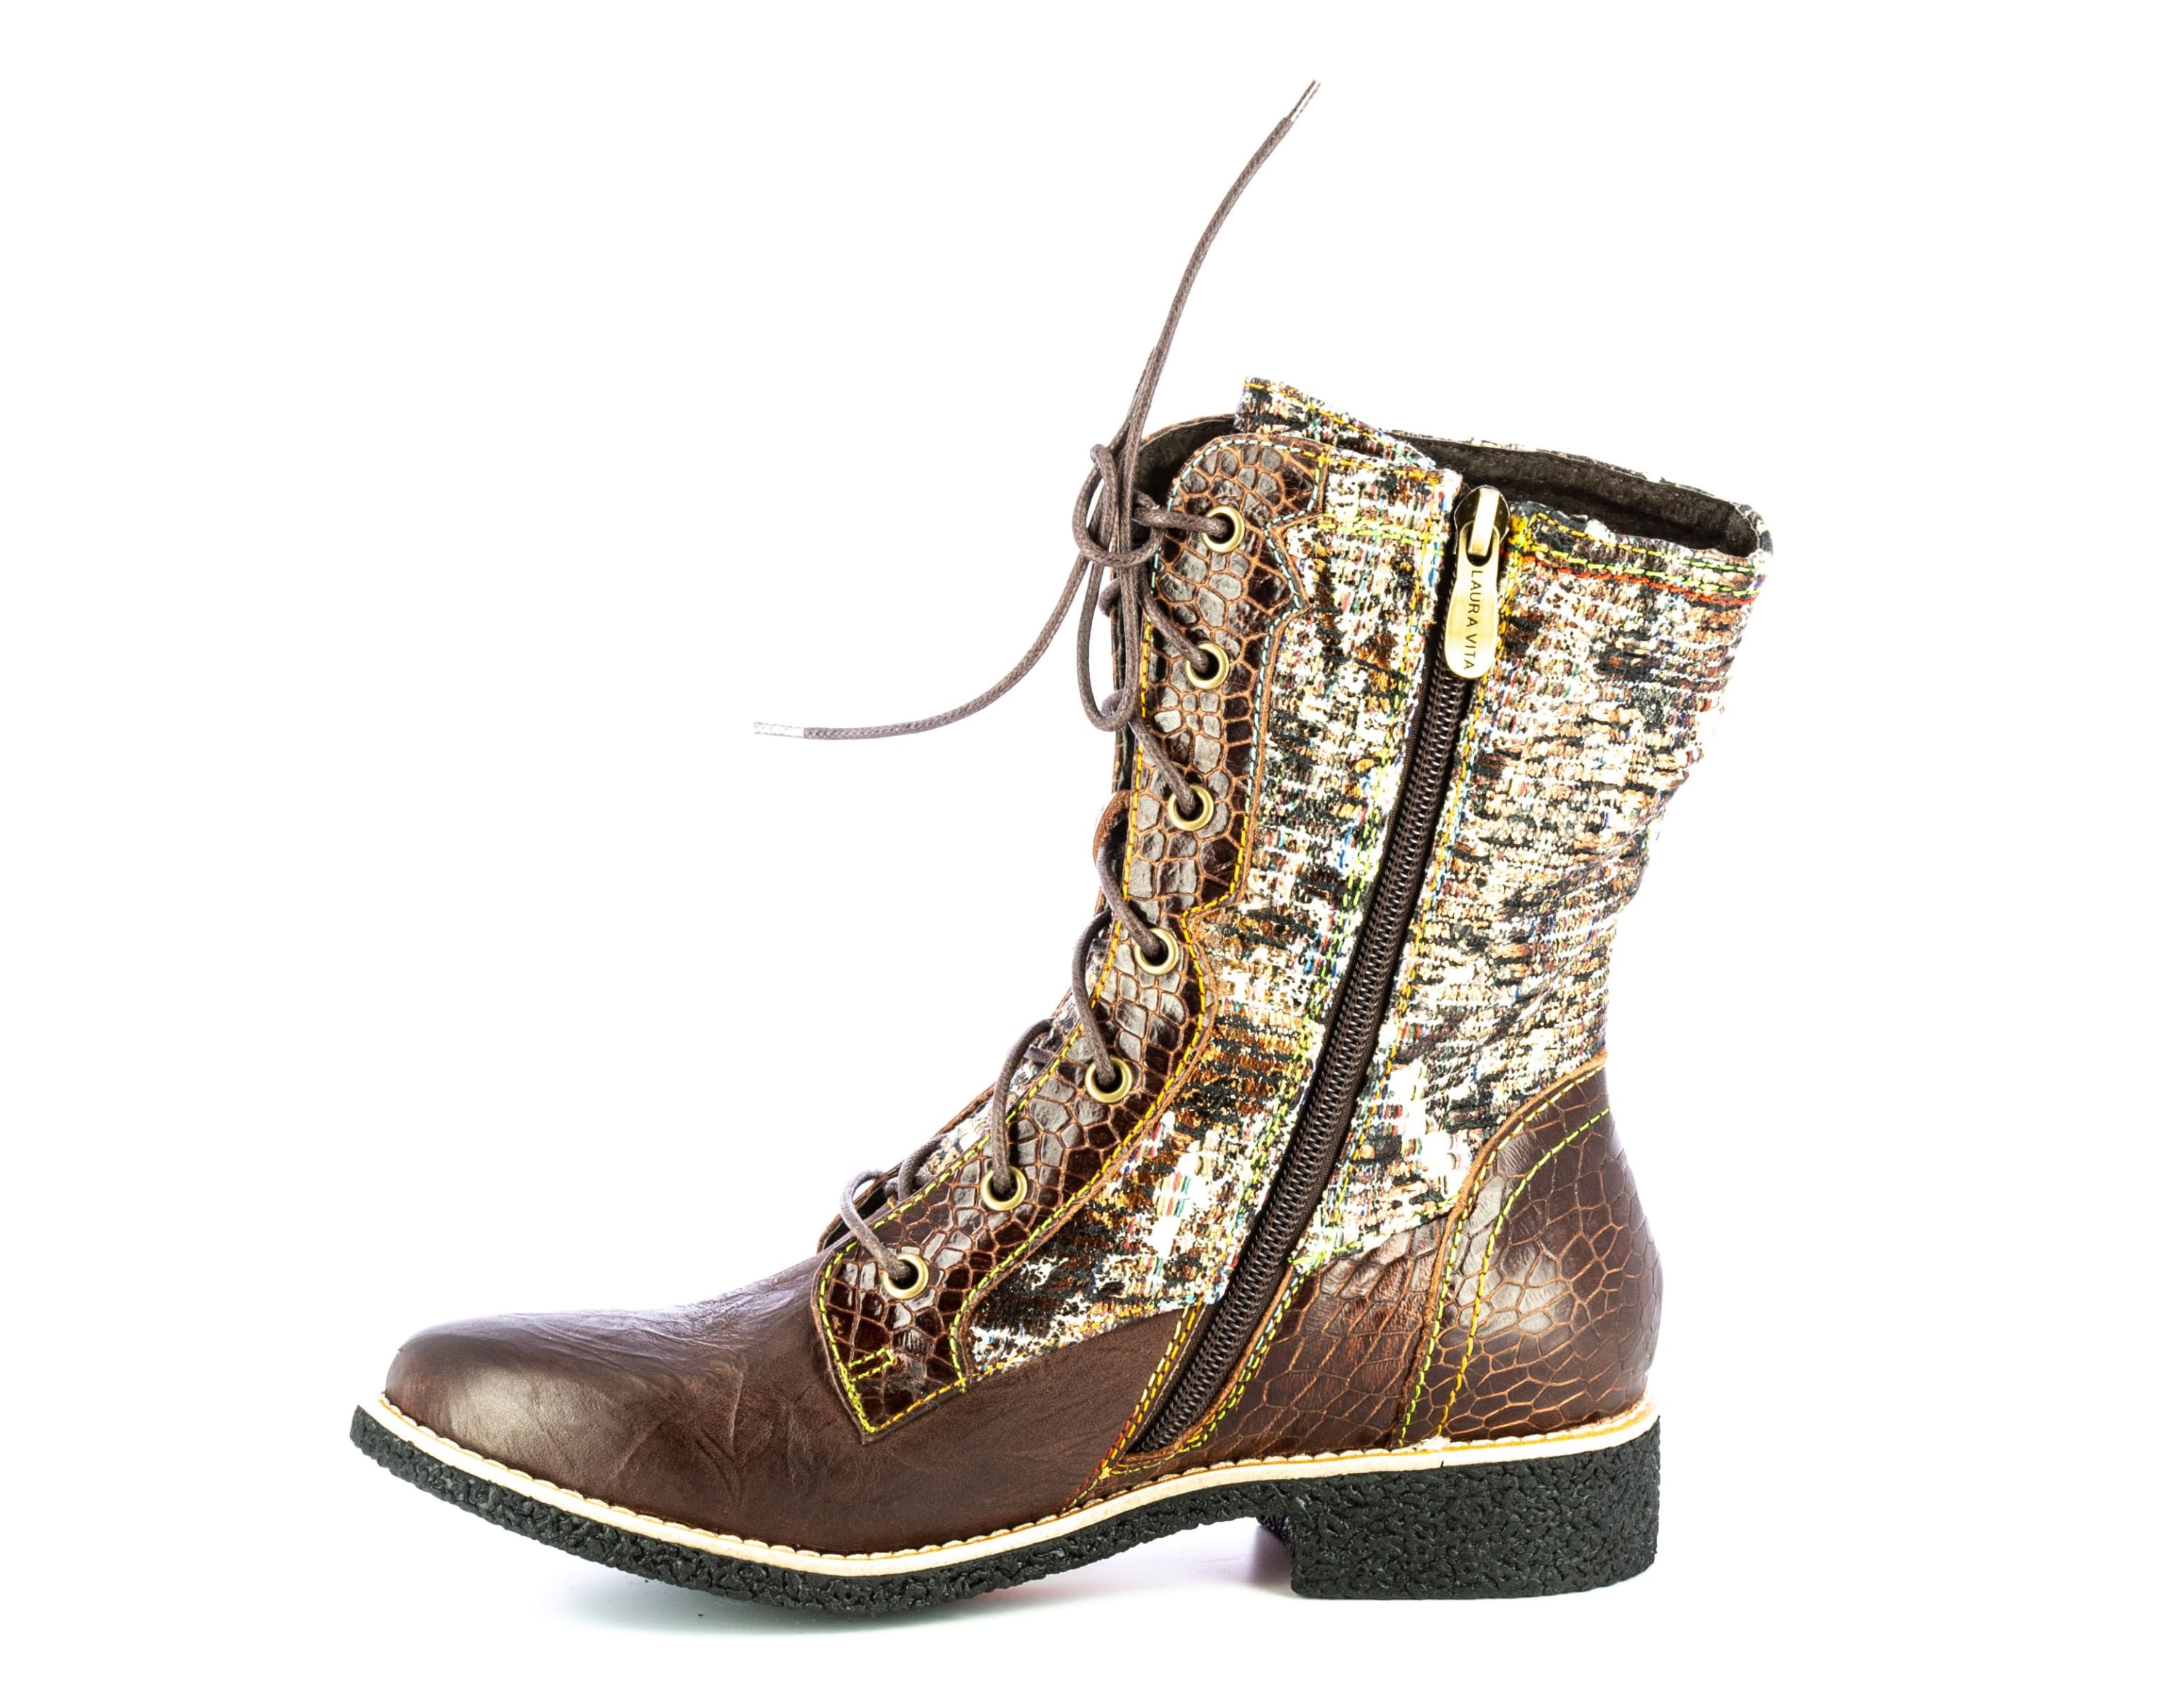 Shoe COCRALIEO 521 - Boots